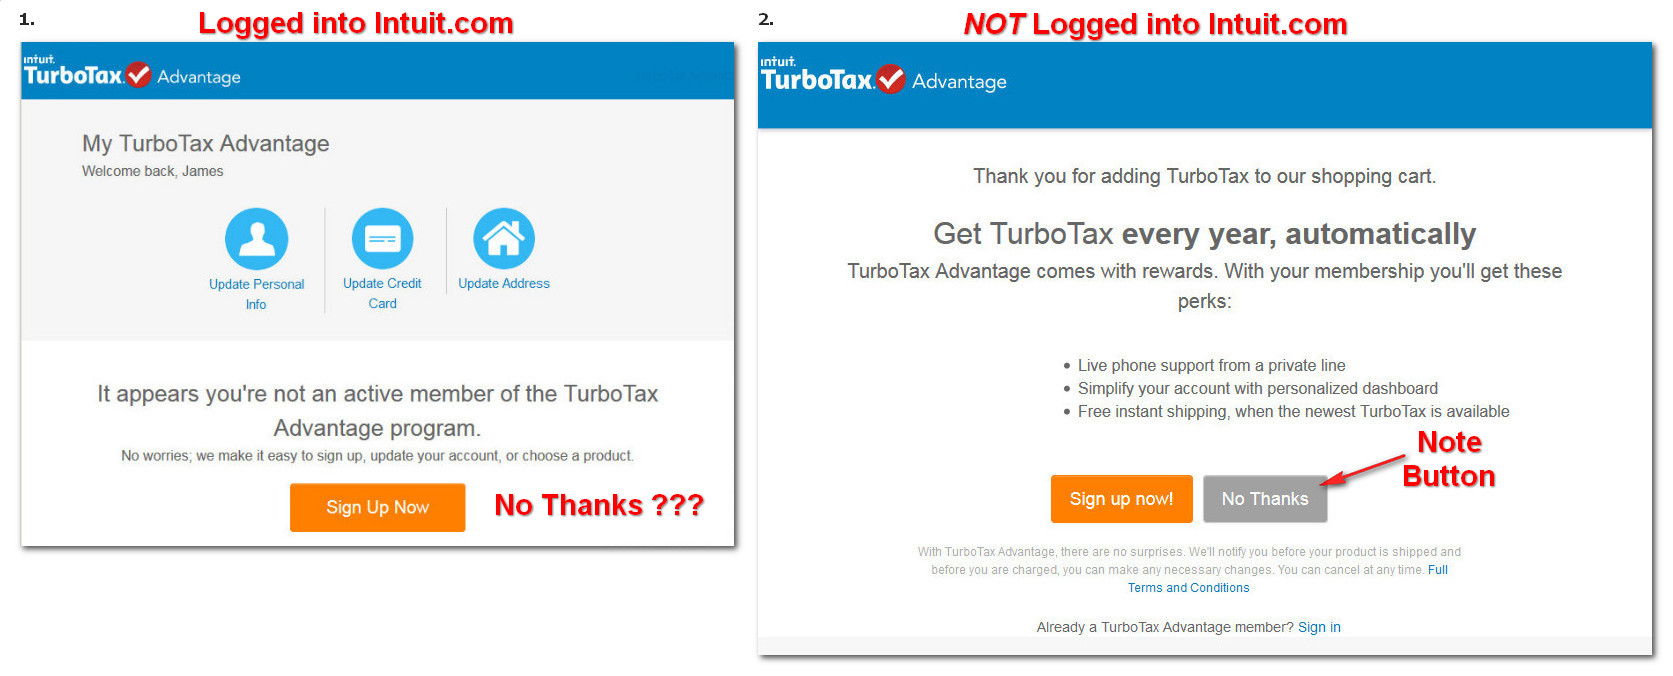 TurboTax 2014 Sleeze.jpg